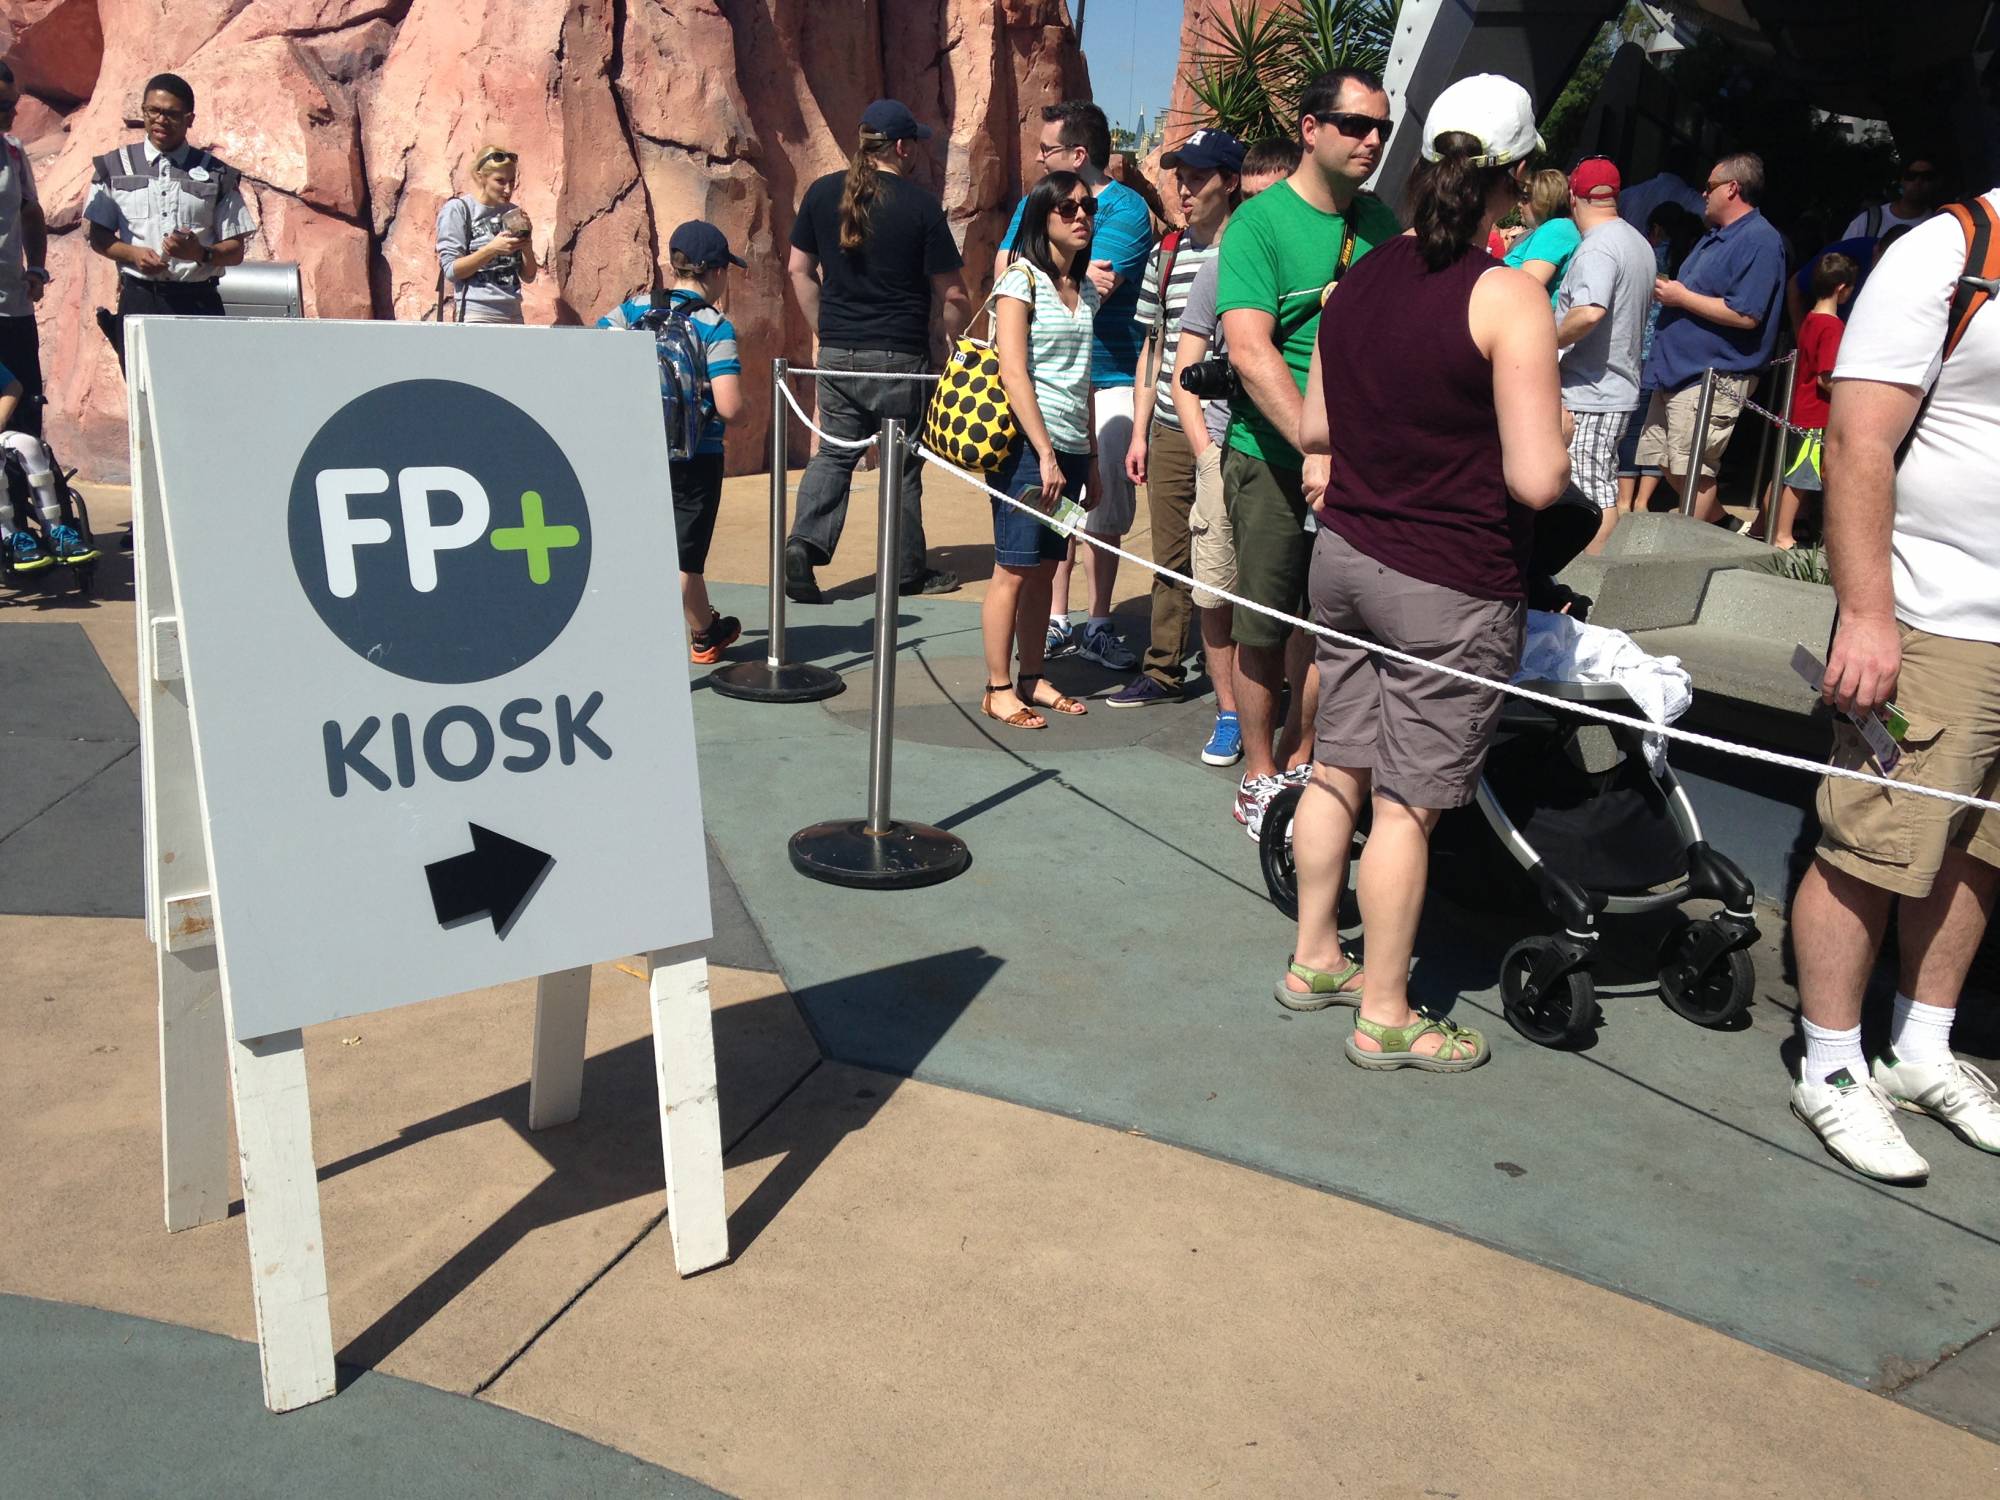 FastPass+ Kiosk in Tomorrowland